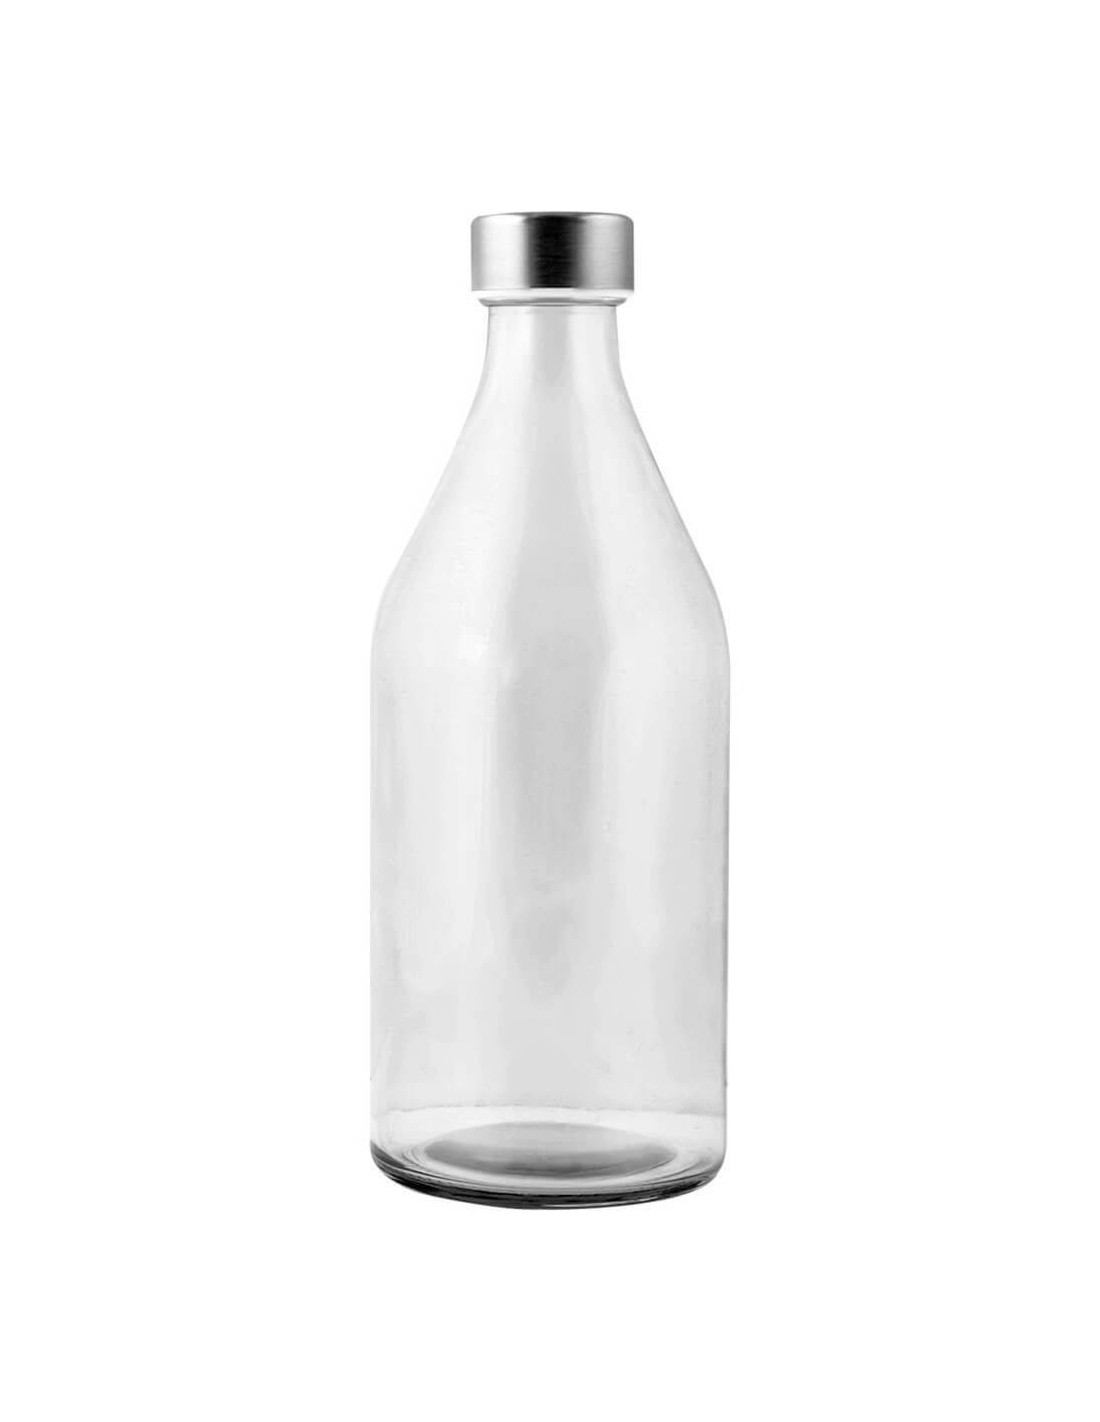 Botella de cristal de 1 litro